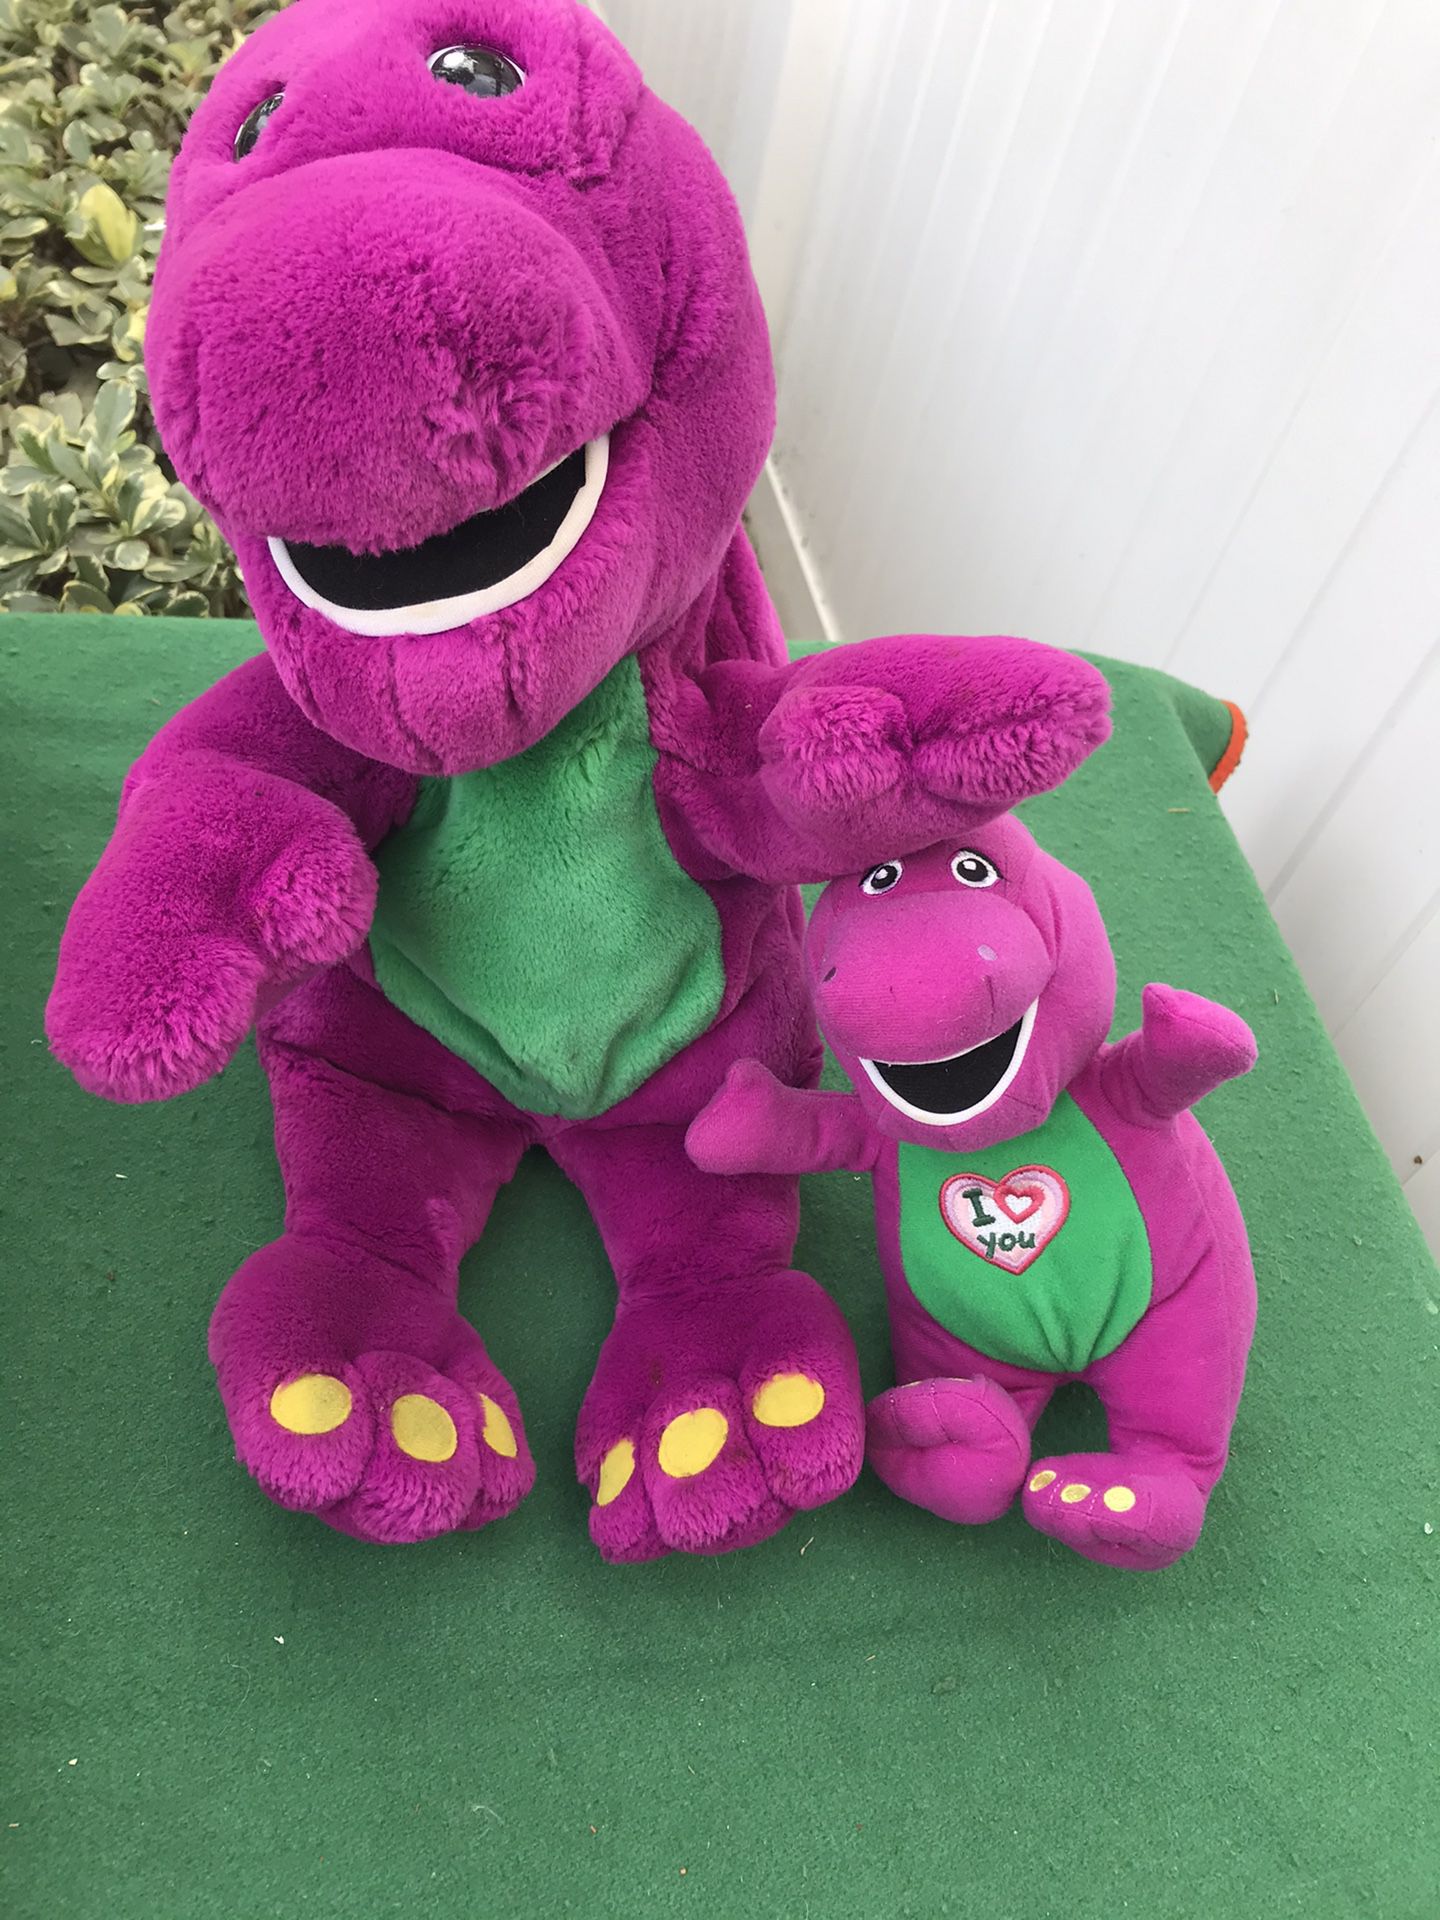 Two Barney’s Dolls